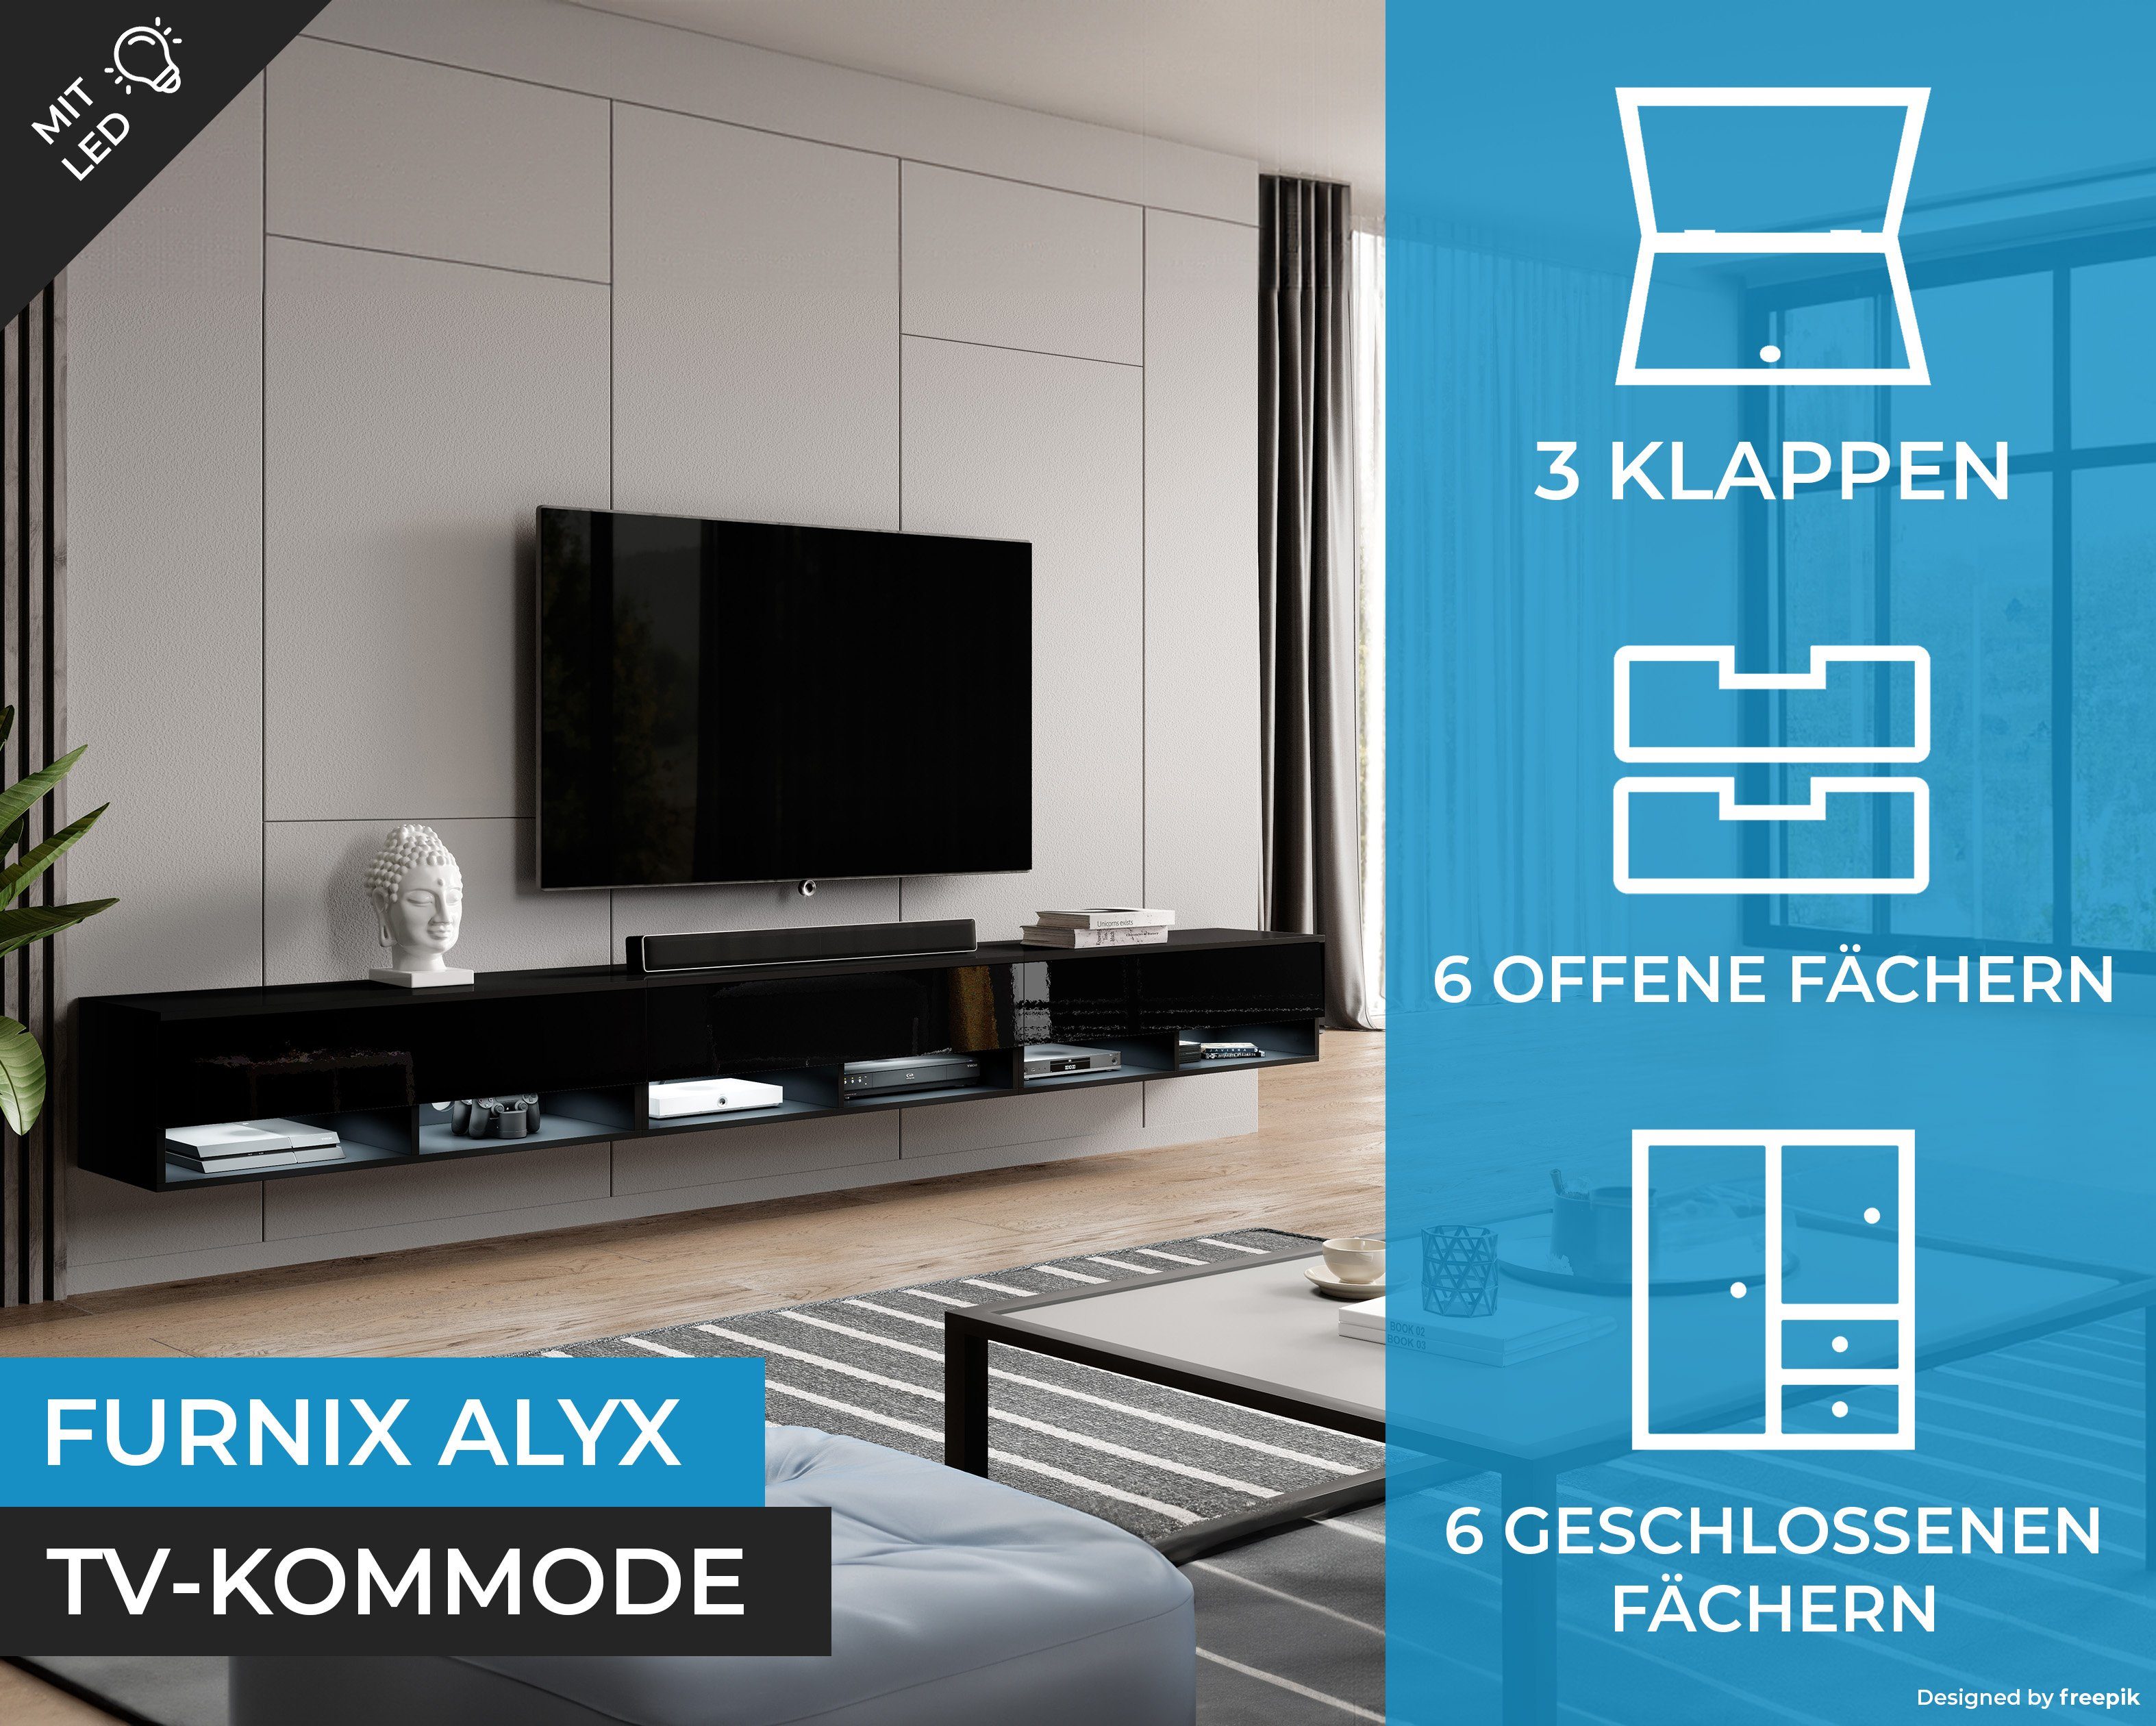 Furnix TV-Schrank ALYX 300 cm cm B300 3 Glanz ohne mit TV-Kommode Türen T32 H34 x x Lowboard LED Schwarz/Schwarz